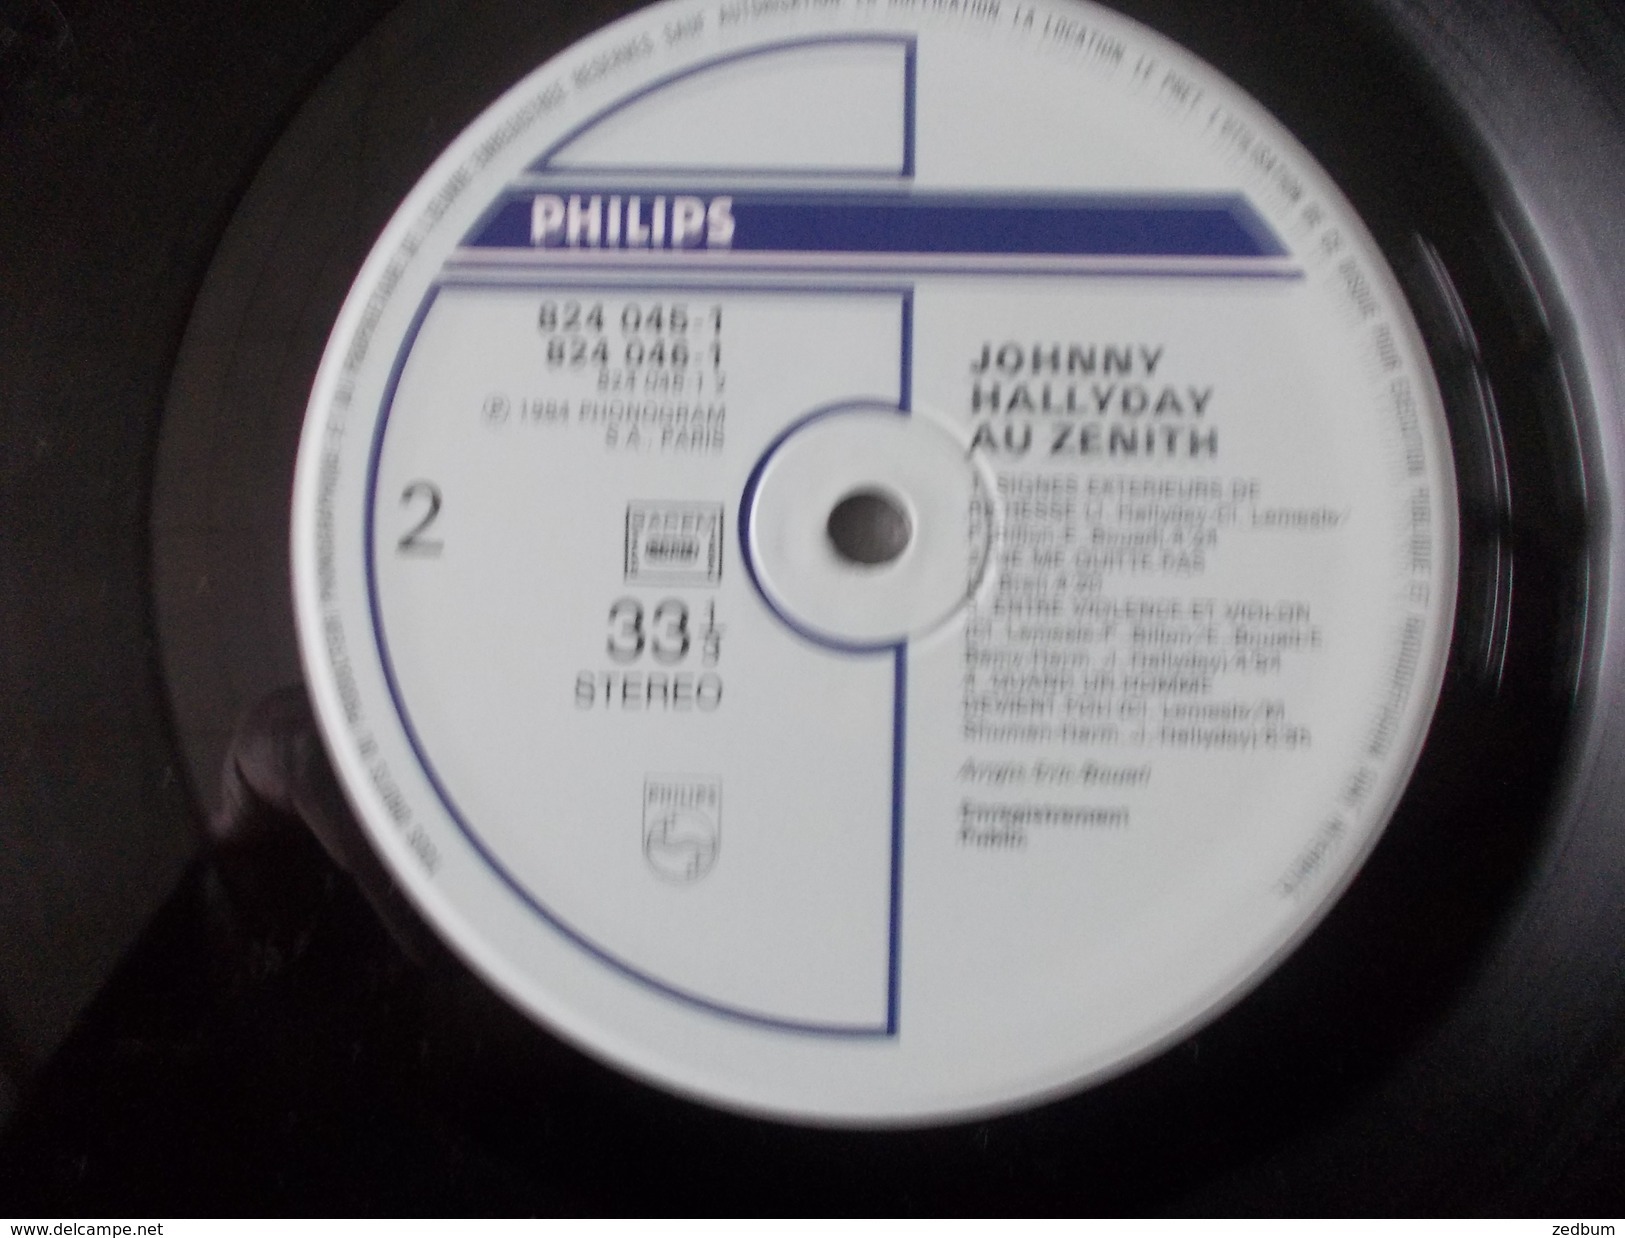 33T - Johnny Hallyday double album 20 titres au zenith